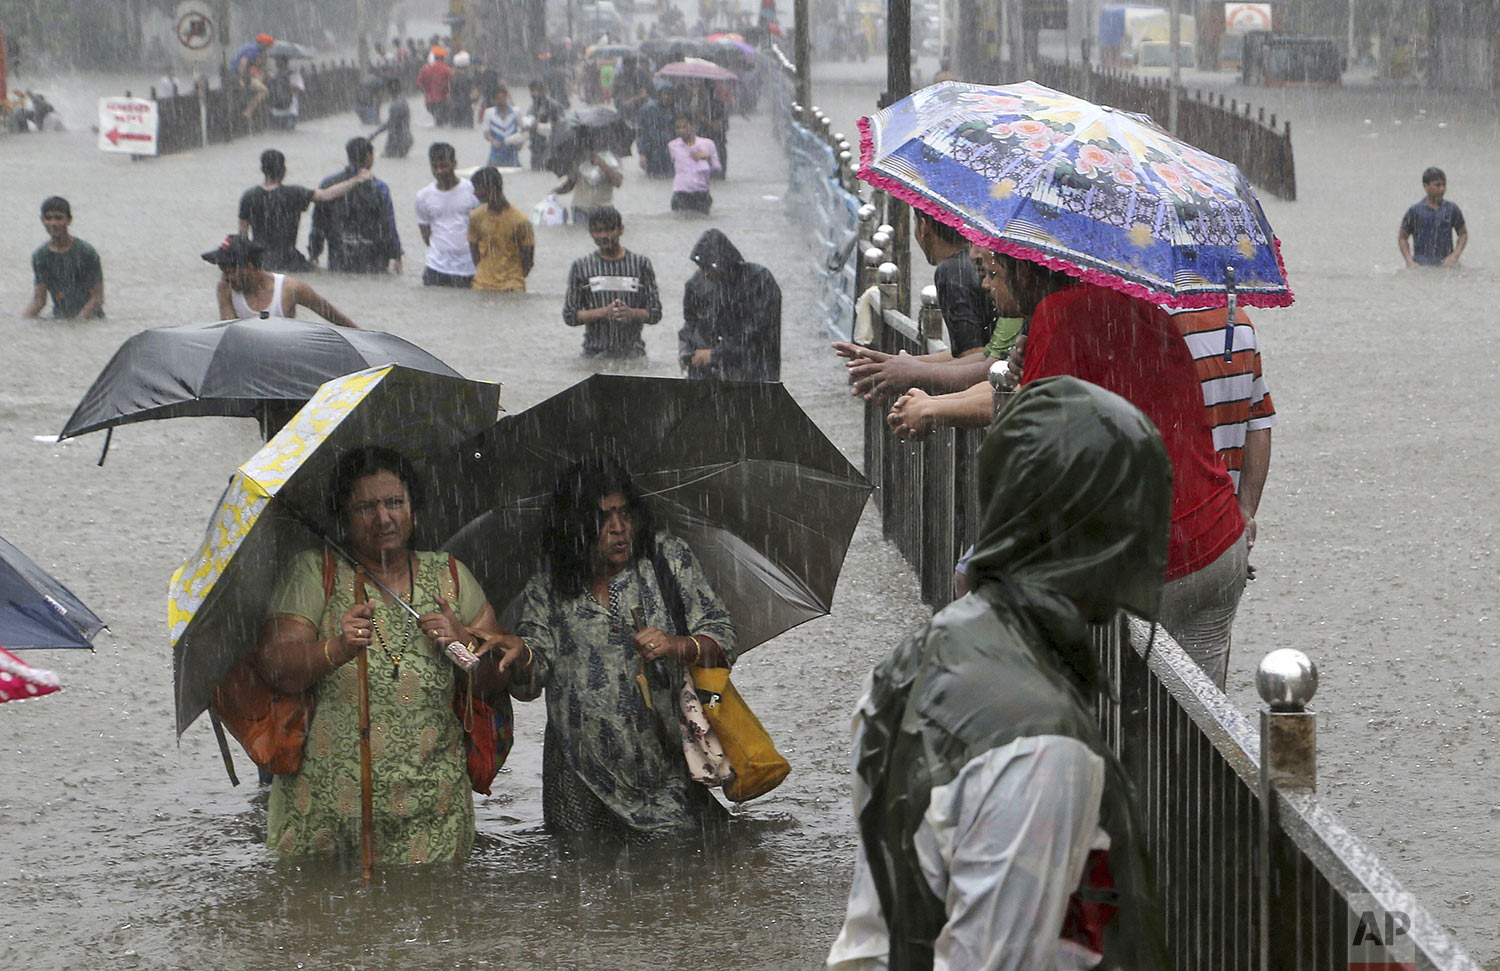  People navigate their way through a flooded street as it rains in Mumbai, India, Wednesday, Sept. 4, 2019. (AP Photo/Rajanish Kakade) 